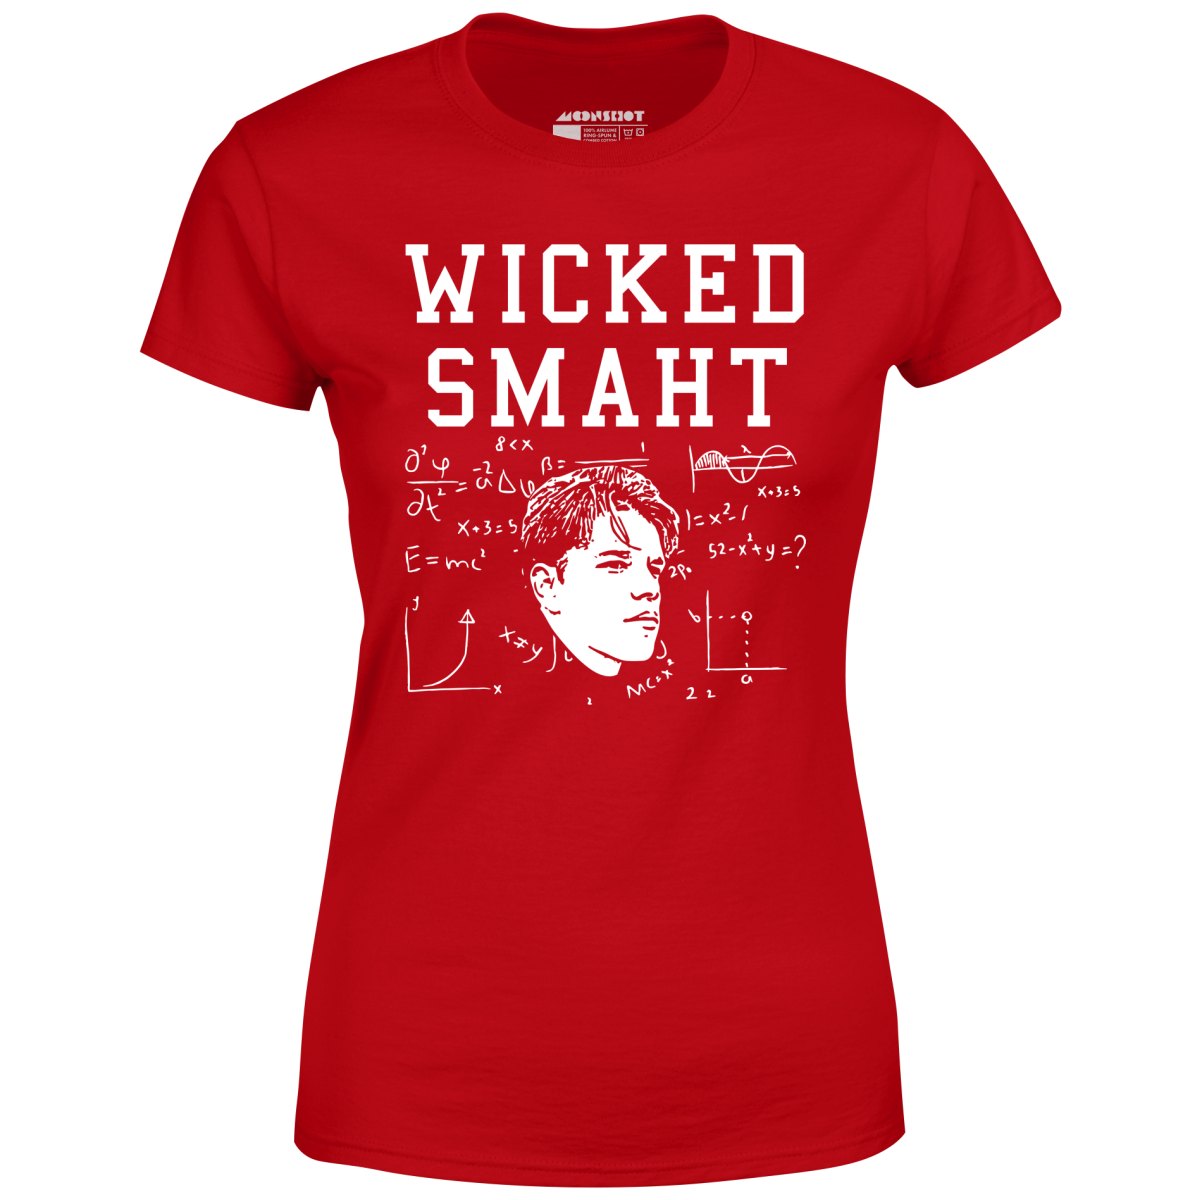 Wicked Smaht - Women's T-Shirt